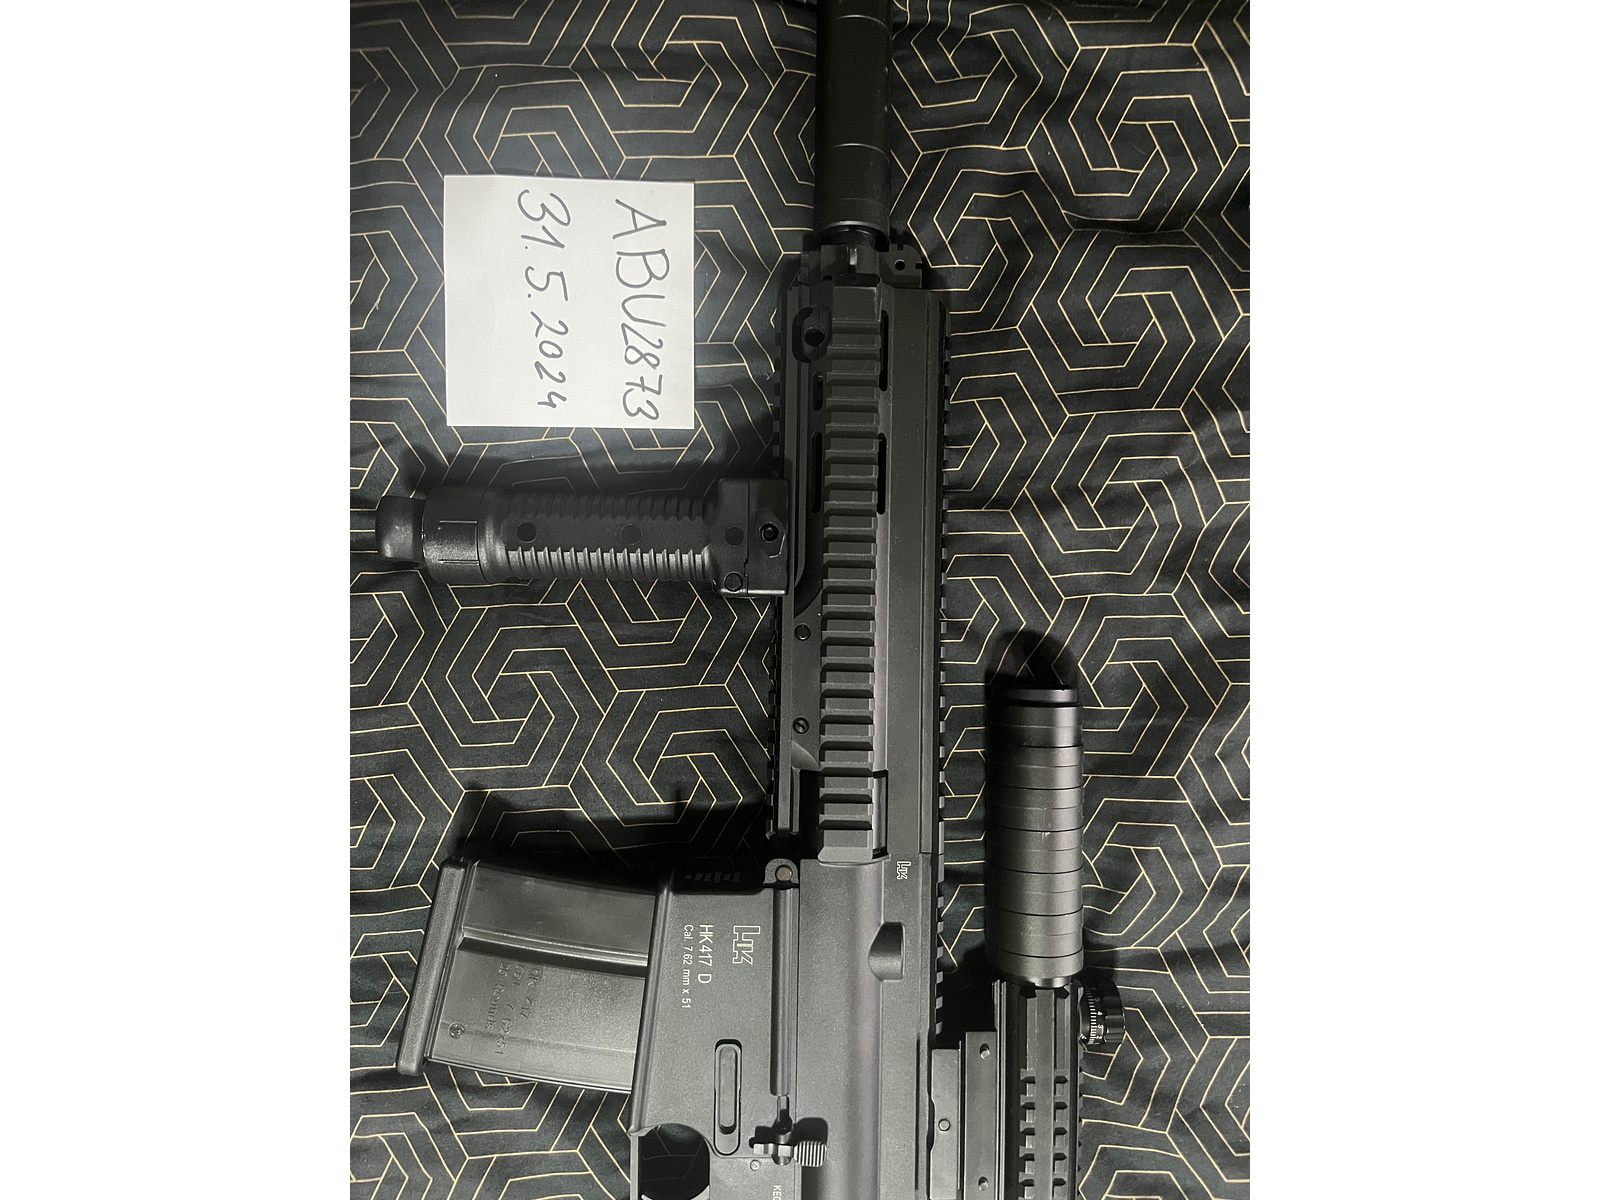 HK417D GBB